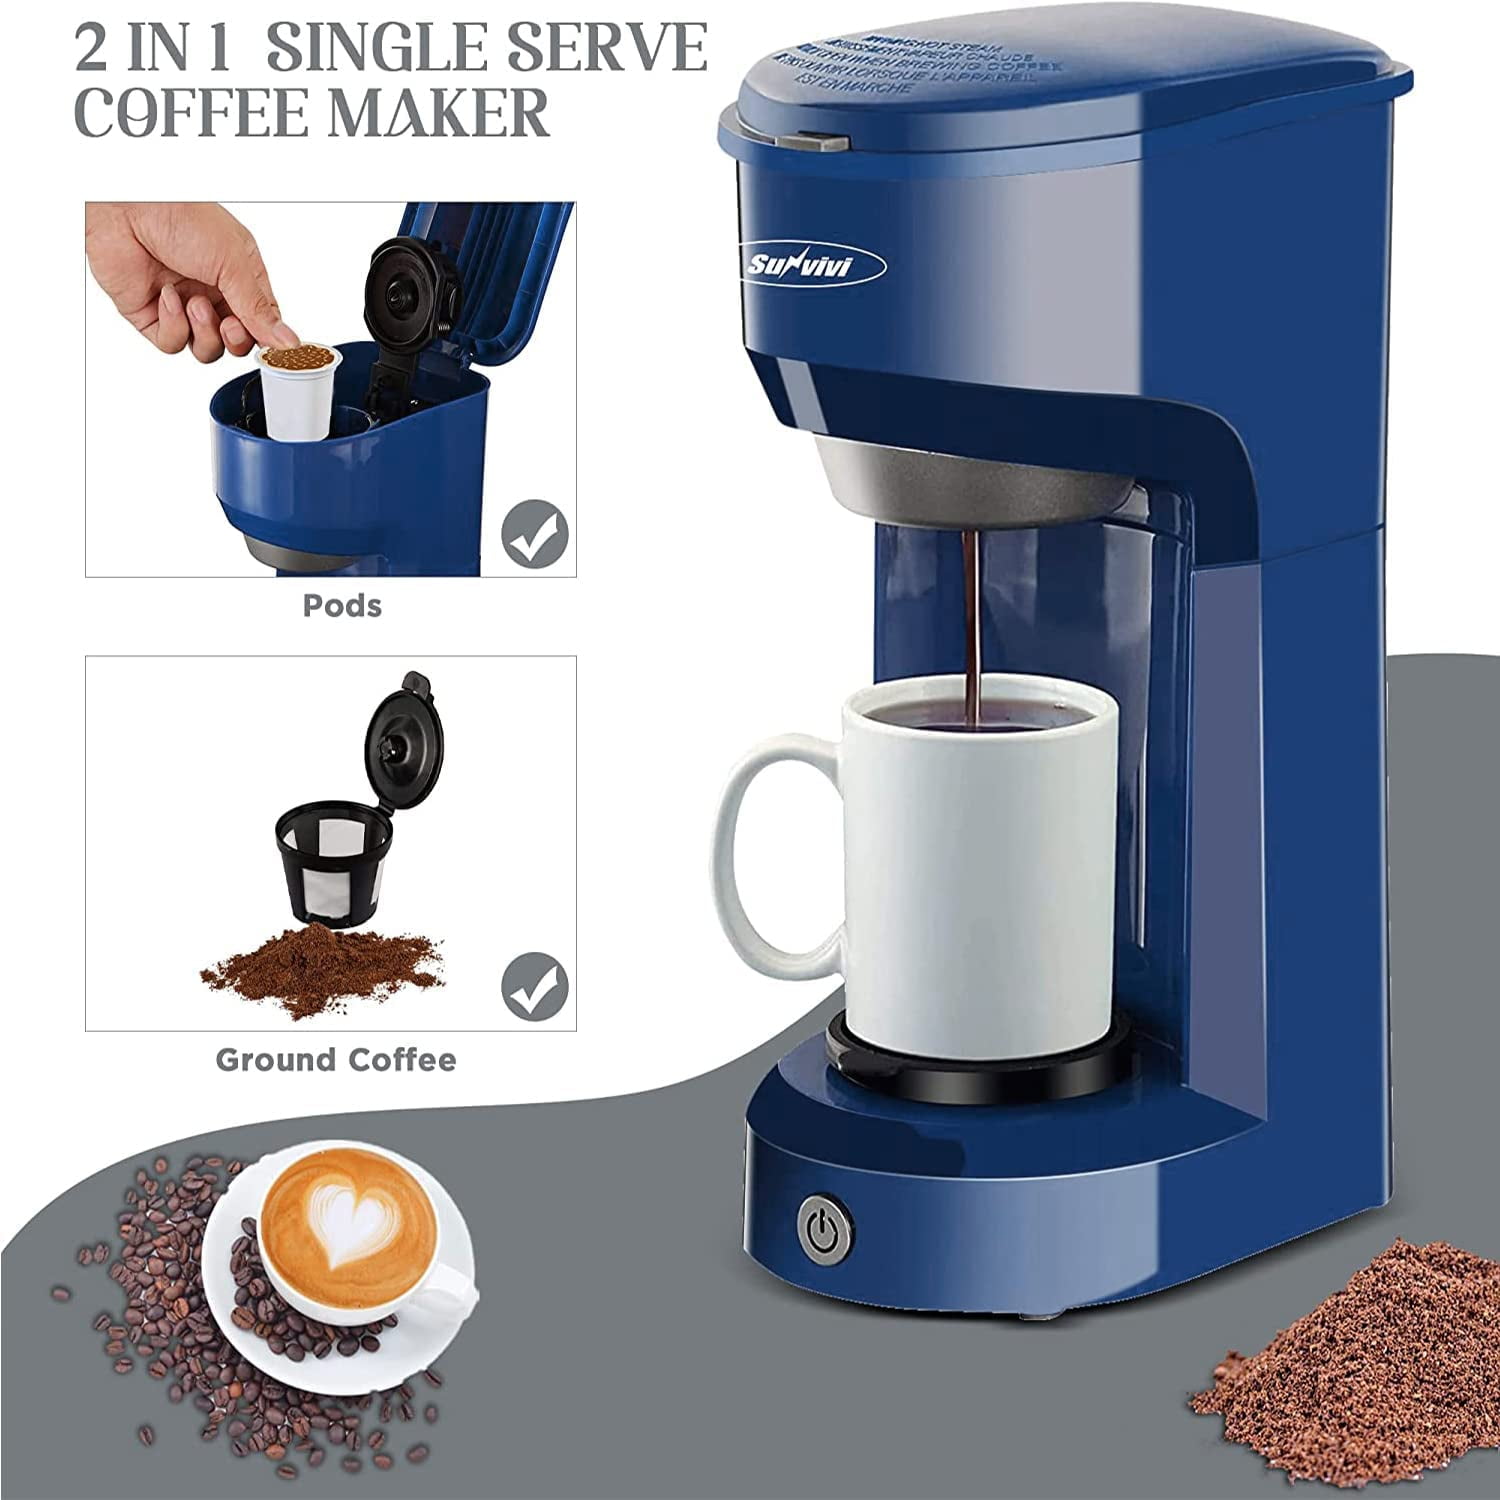 Source Defond Pump Multi-capsule Coffee Maker dolce Gusto/coffee Powder Capsule  Coffee Machine Hot Sale 19bar 3 in 1 Electric on m.